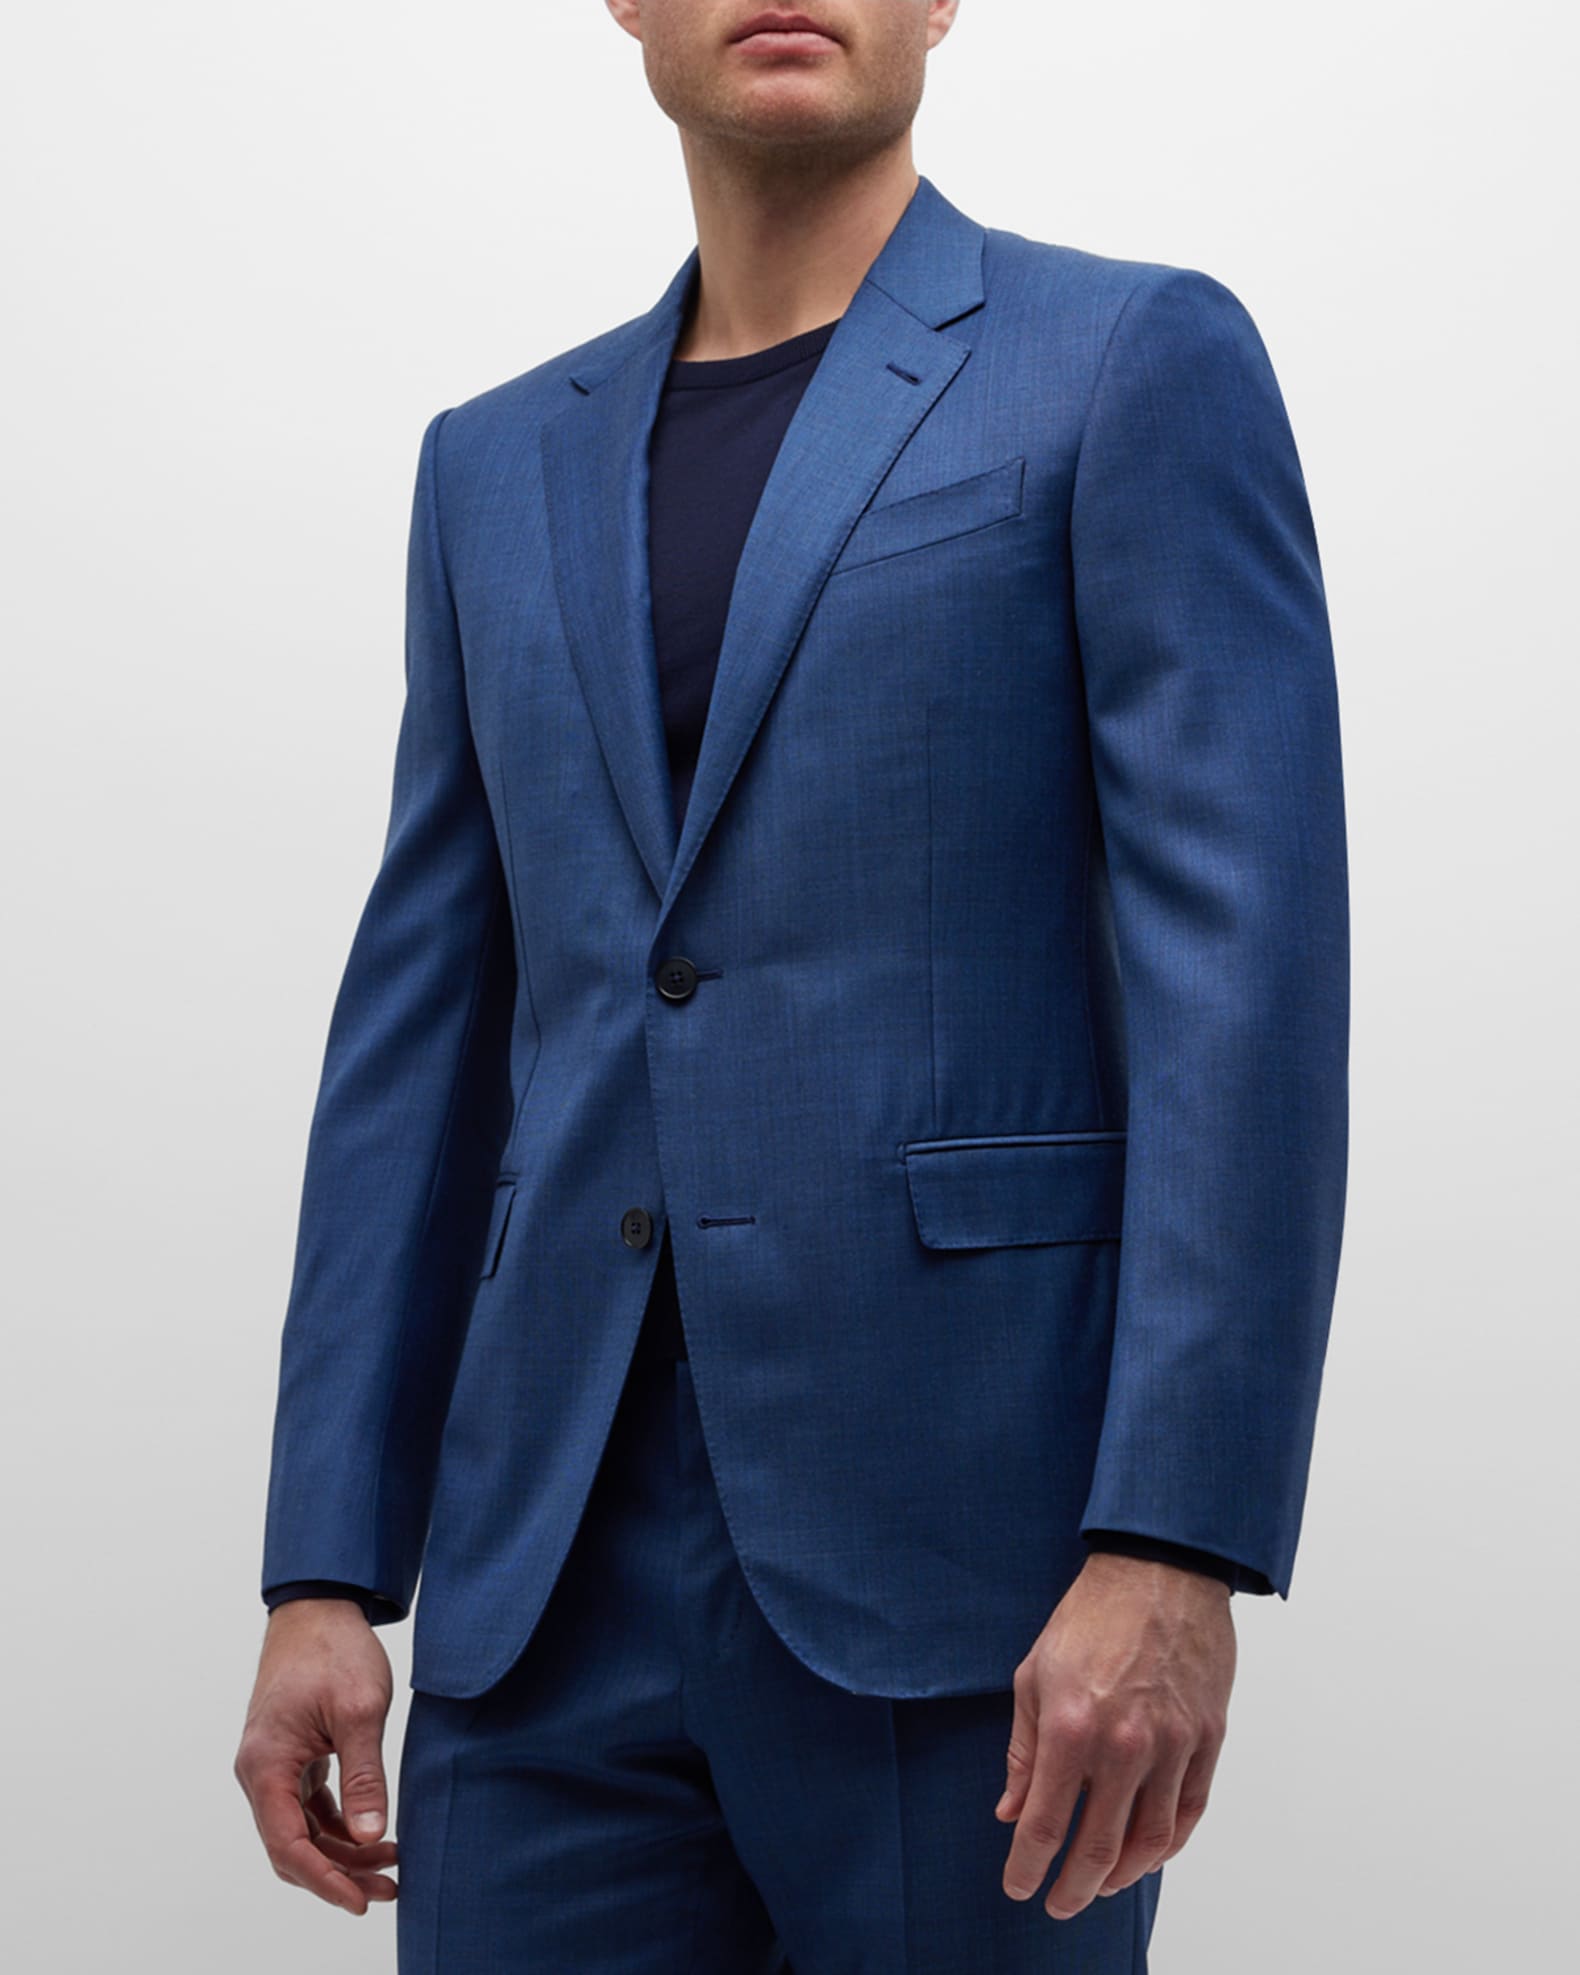 ZEGNA Men's Solid Wool Classic-Fit Suit | Neiman Marcus